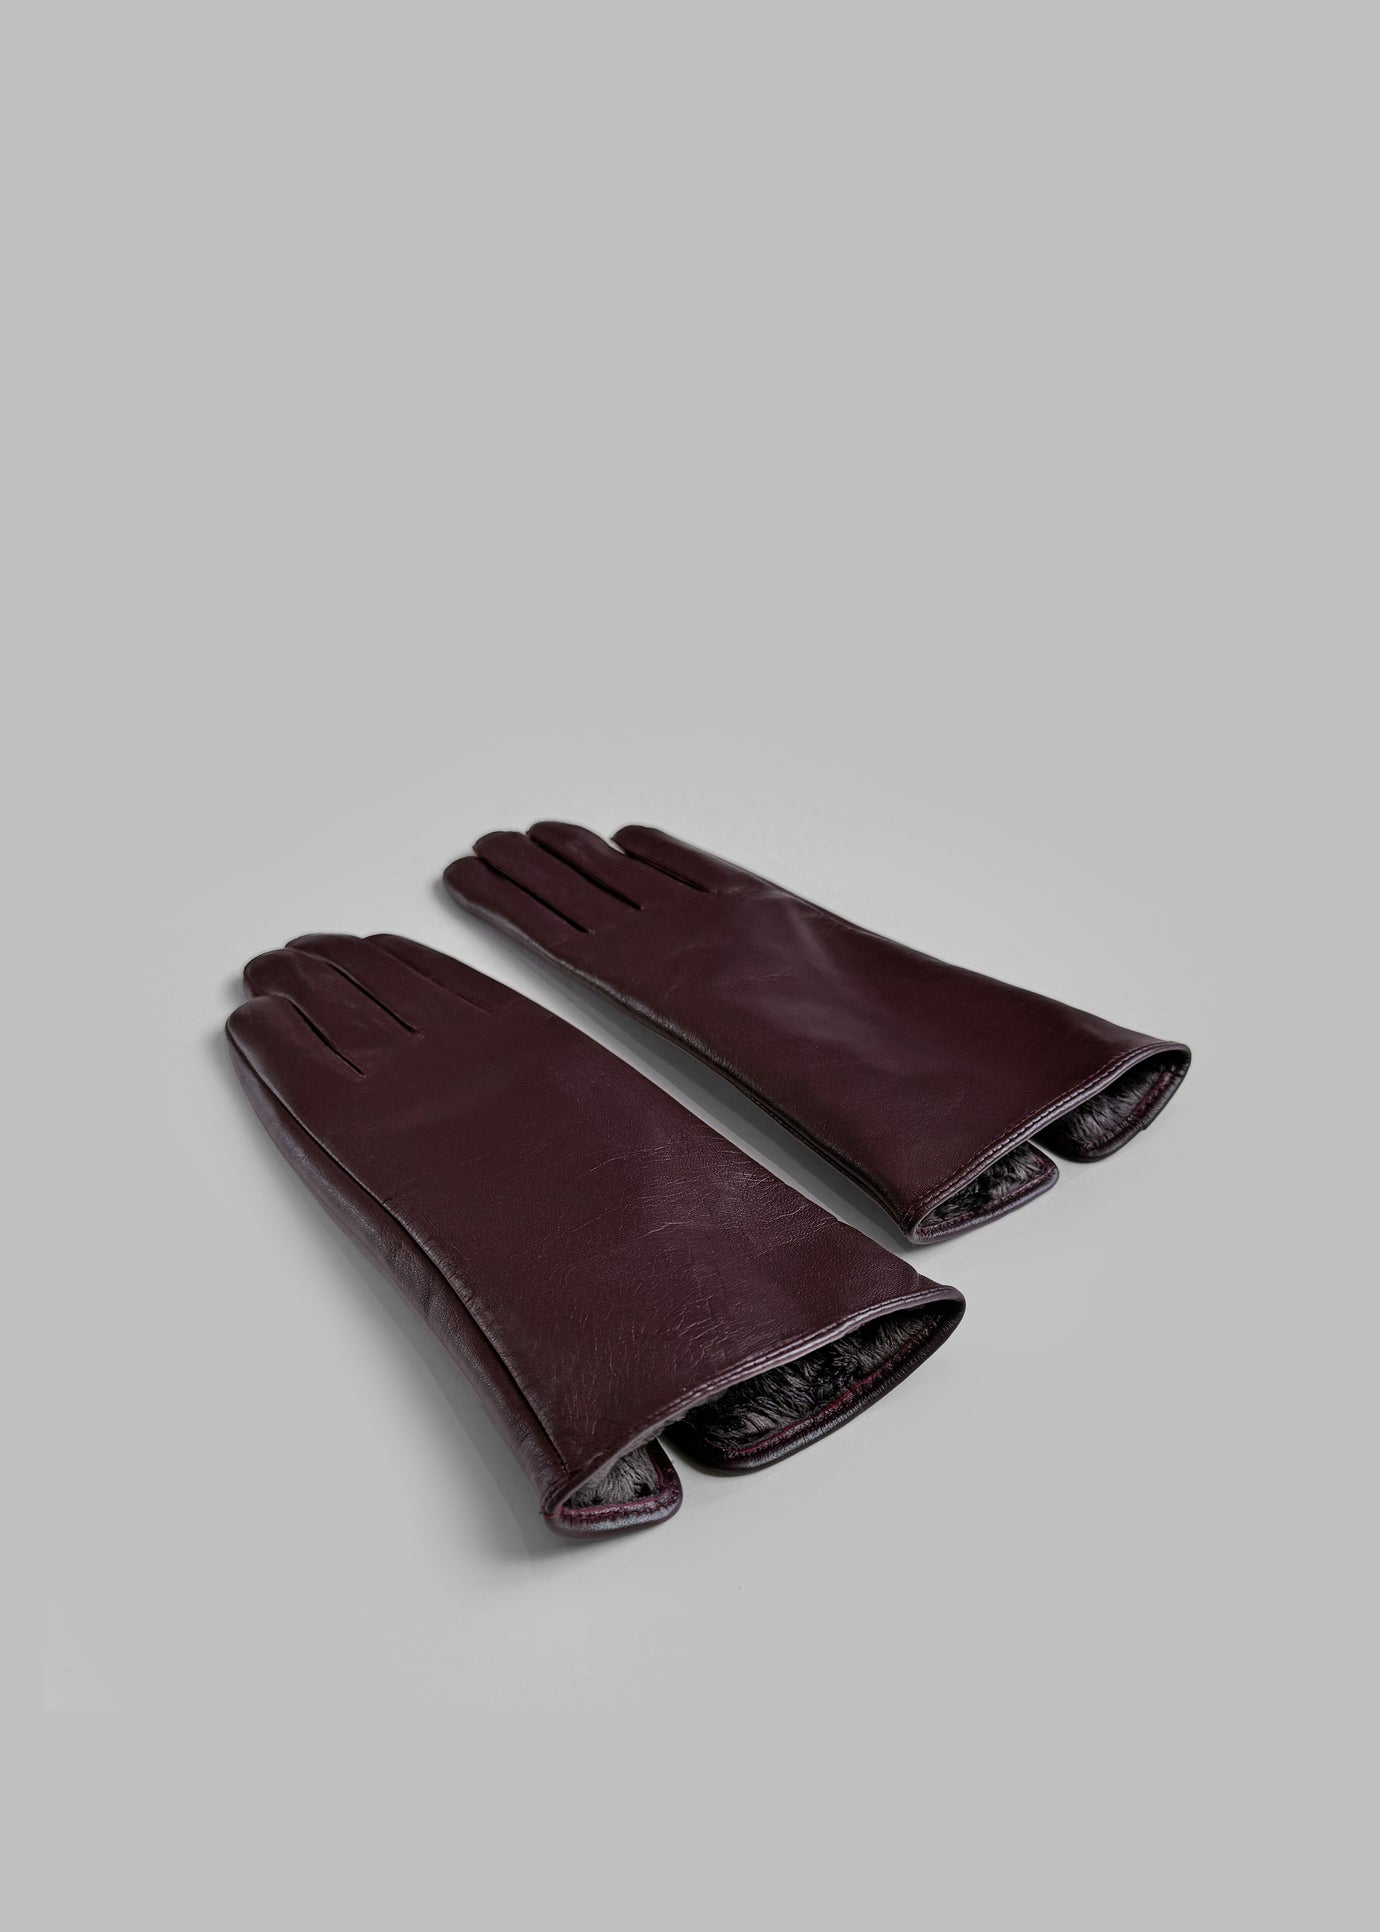 Ruby Leather Gloves - Burgundy - 1